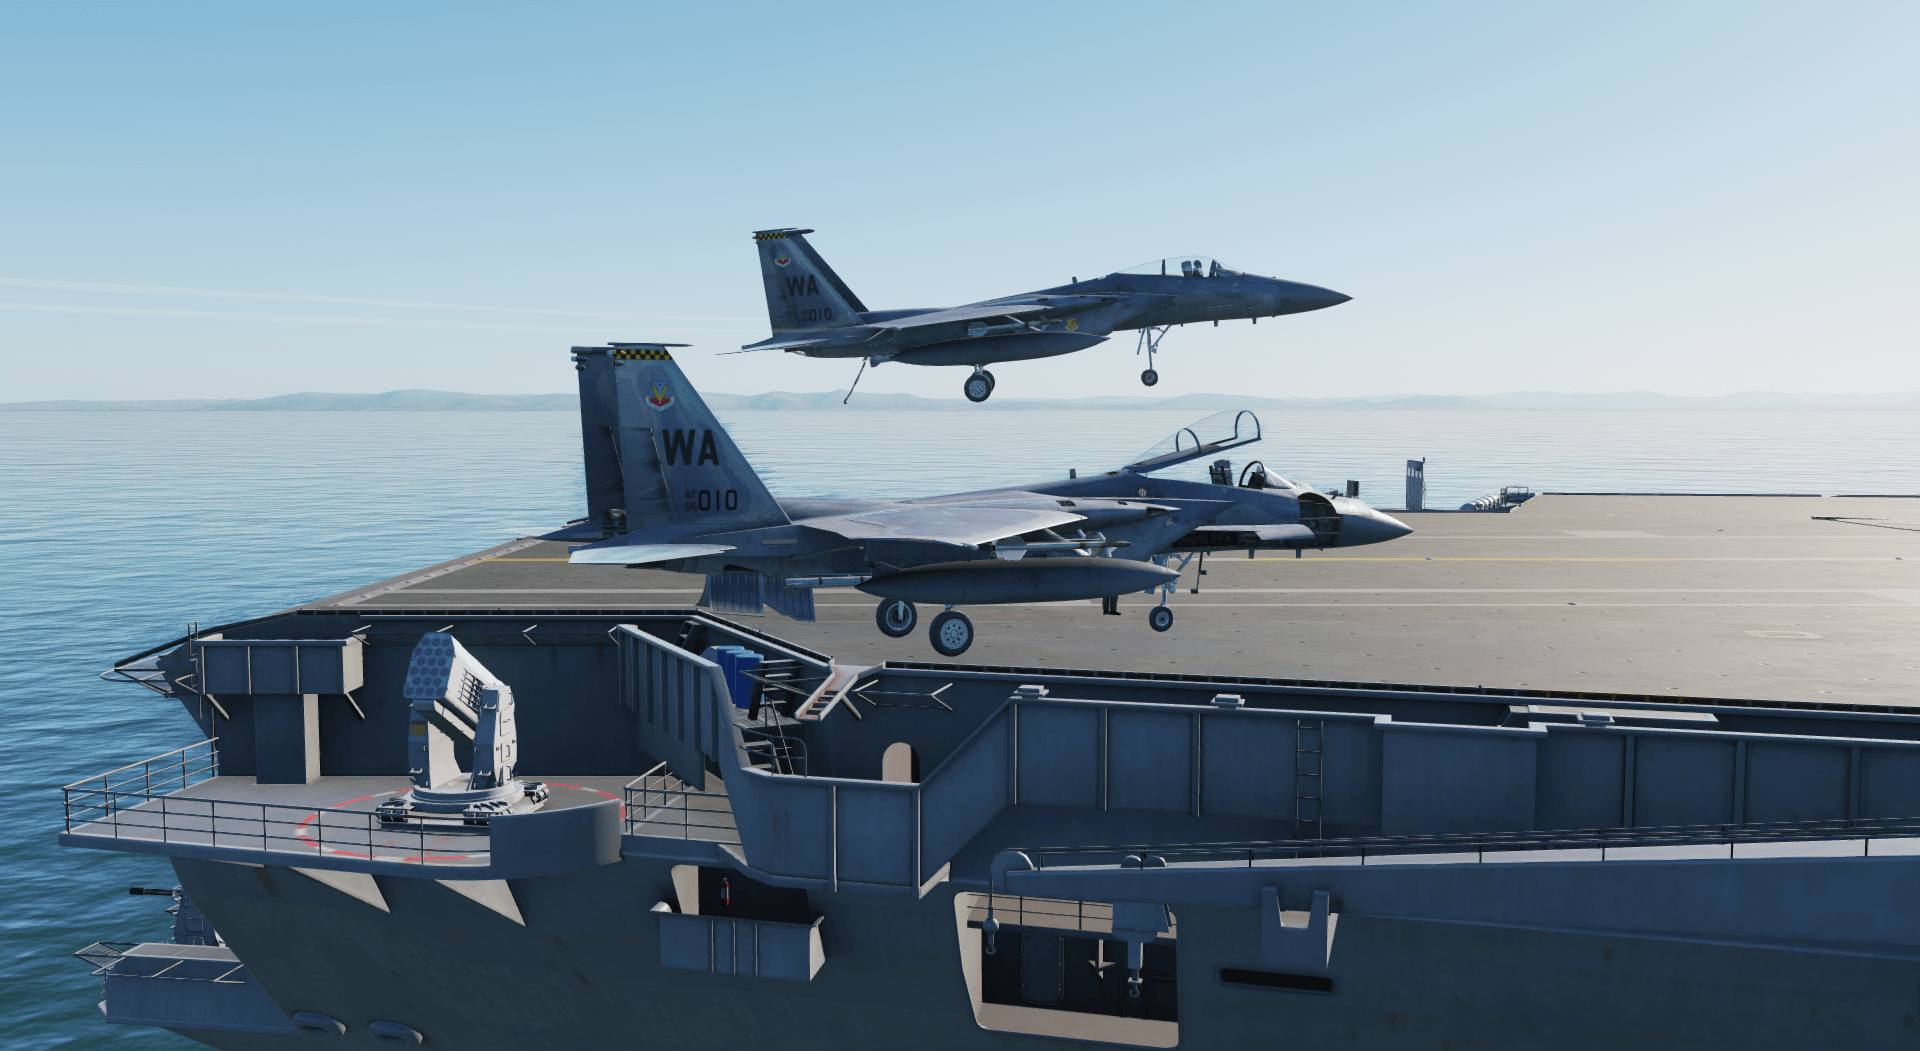 Naval Eagle Mod (No longer working)